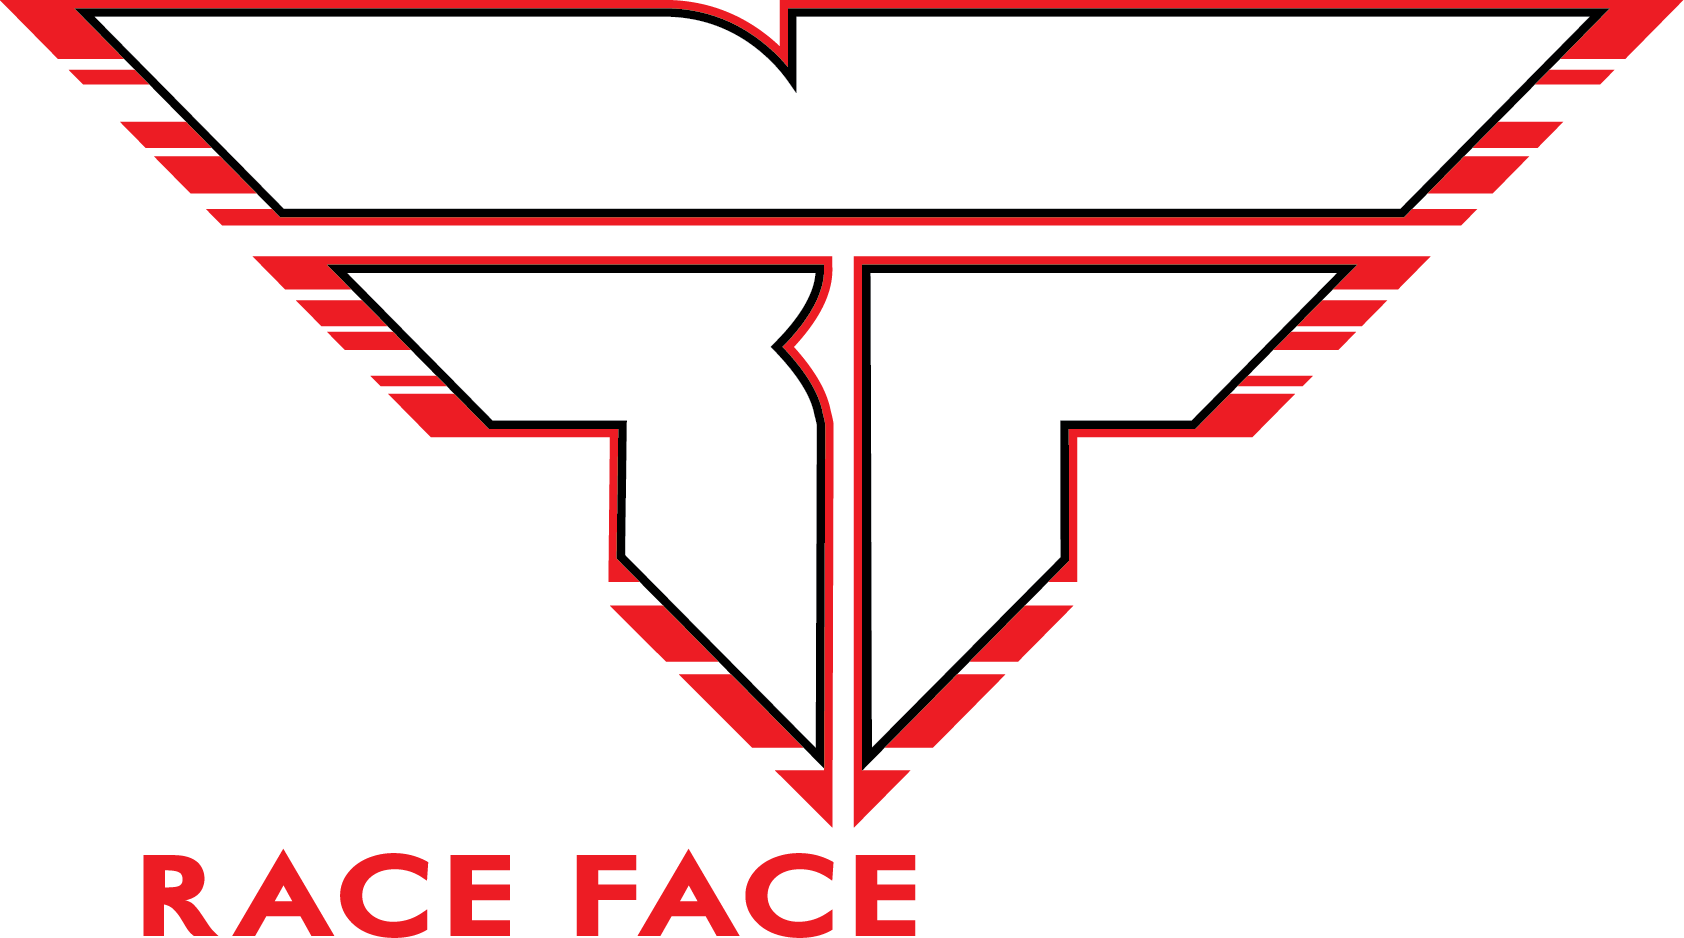 Race Face Digial Logo White